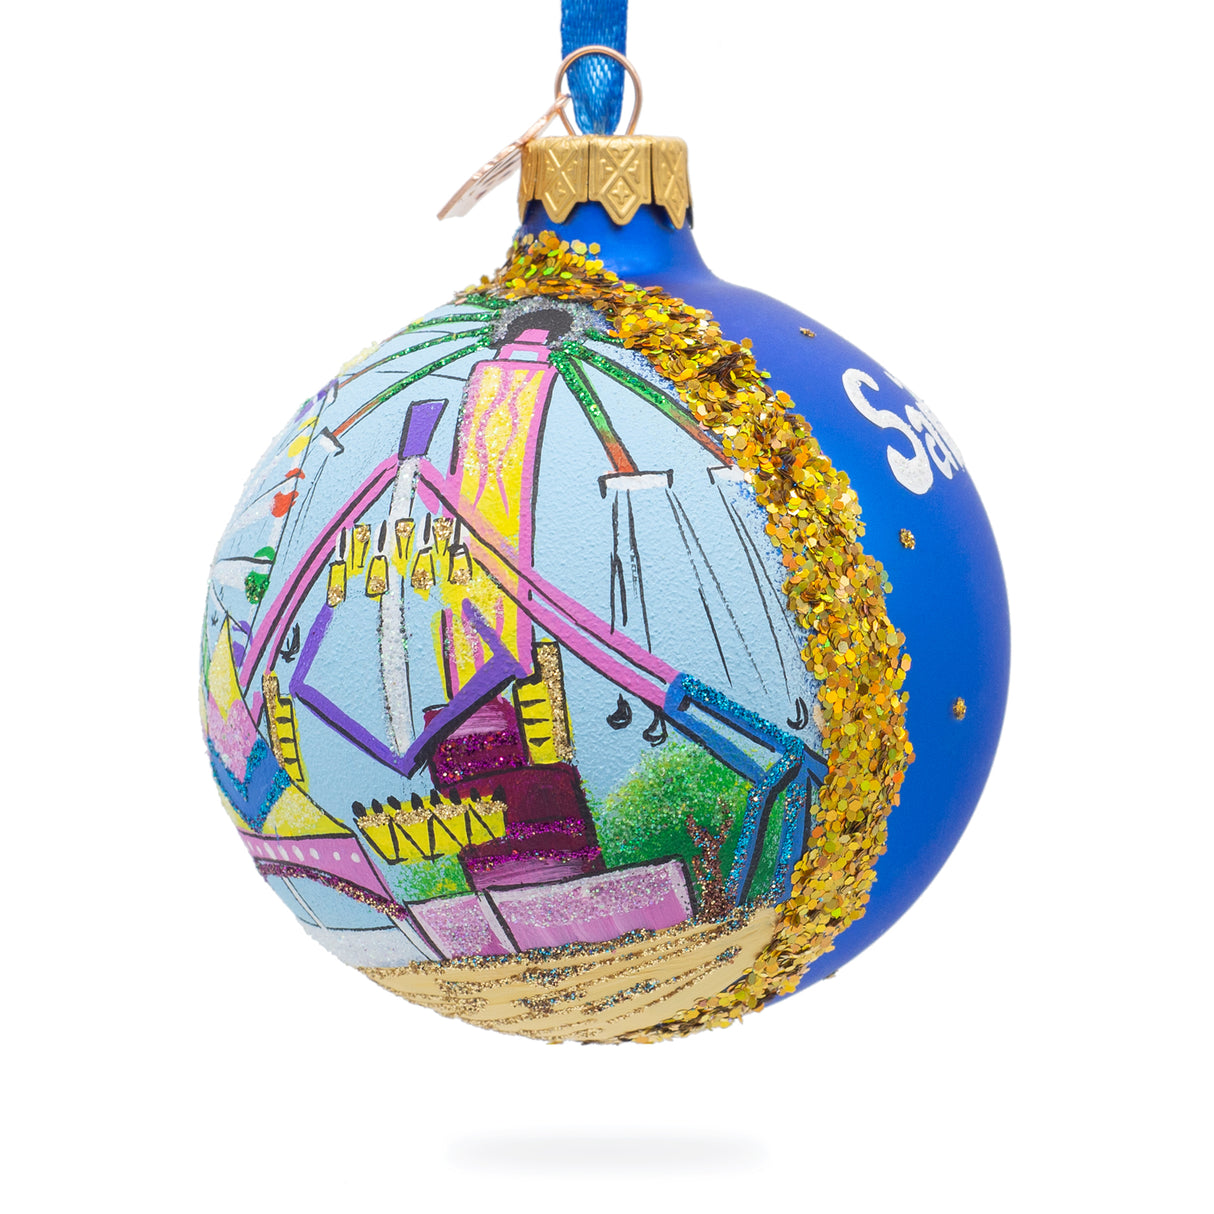 Buy Christmas Ornaments > Travel > North America > USA > Minnesota by BestPysanky Online Gift Ship